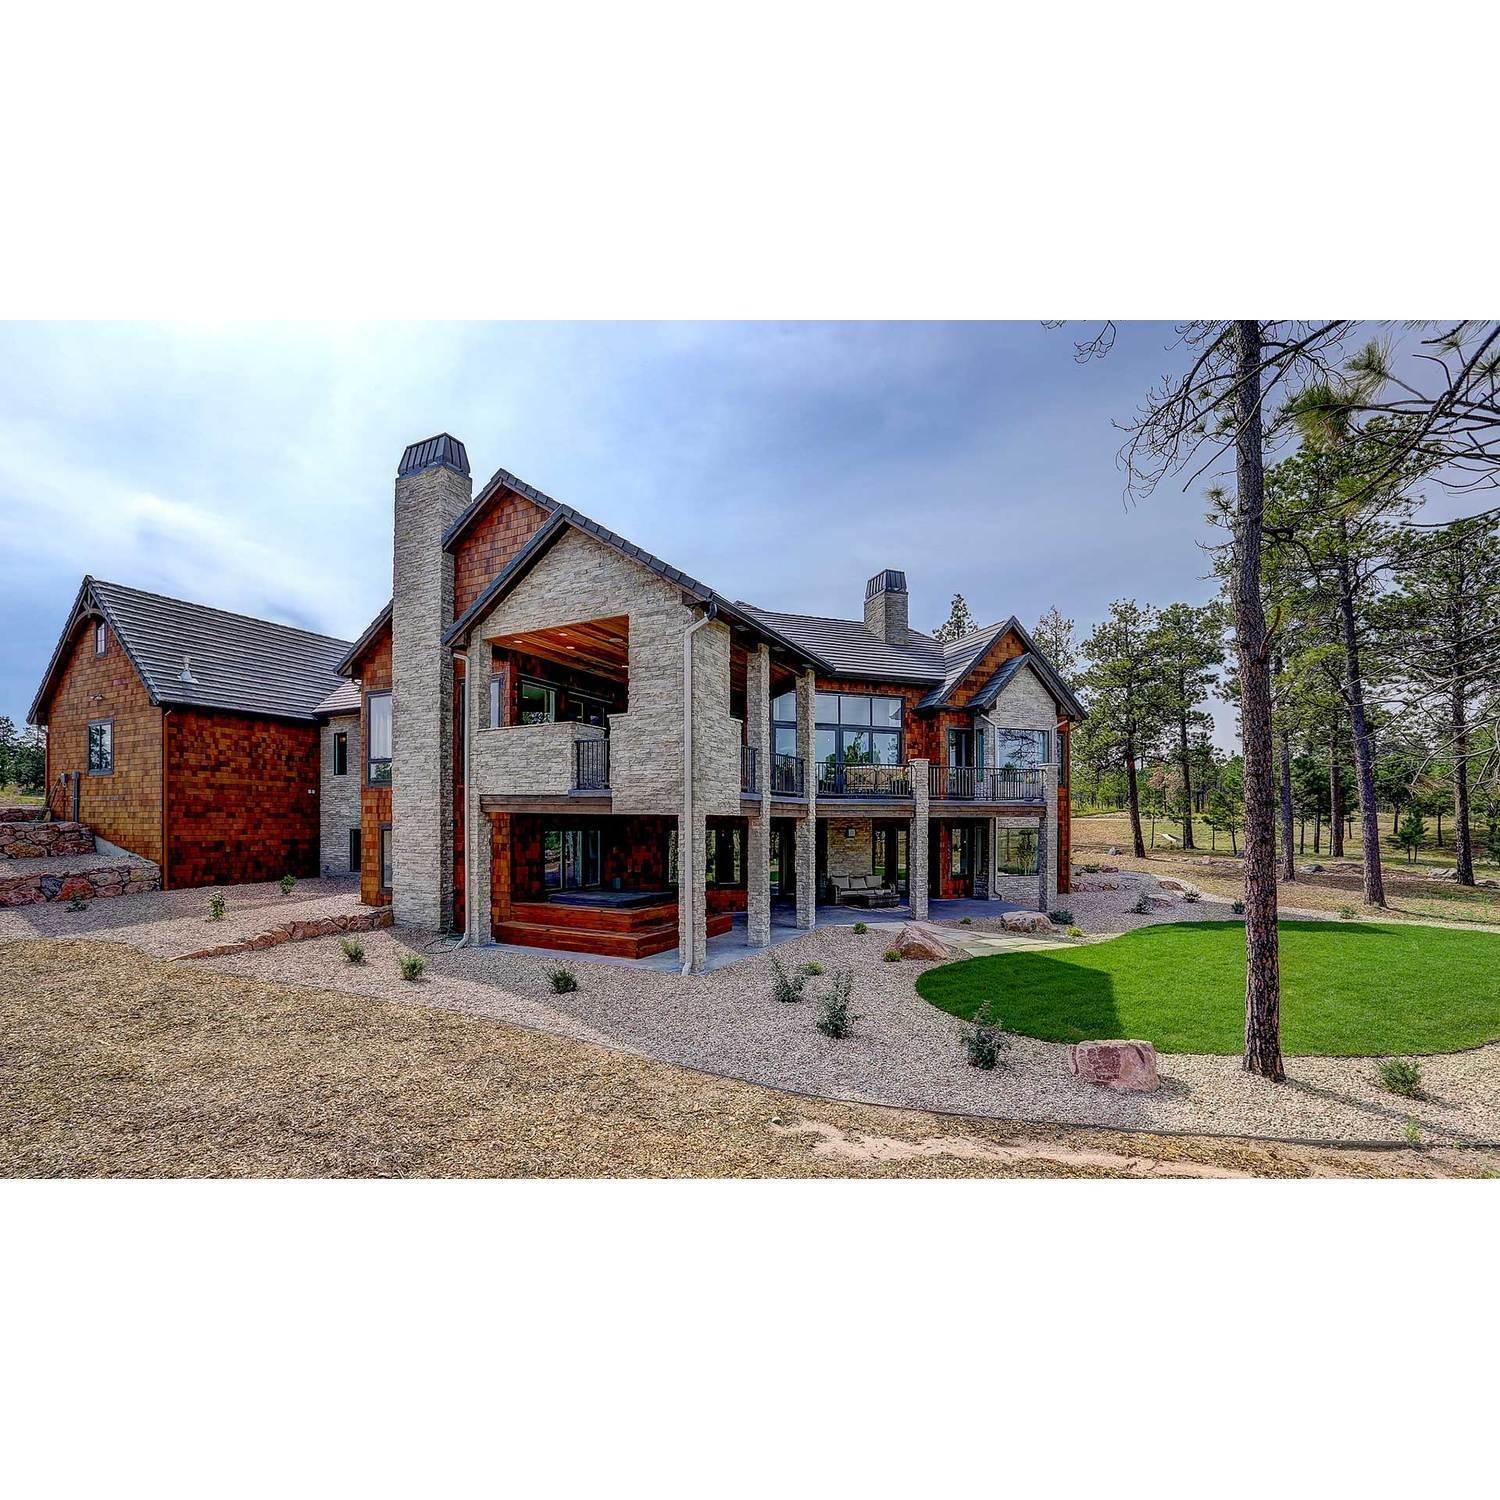 42. Galiant Homes building at 4783 Farmingdale Dr, Colorado Springs, CO 80918